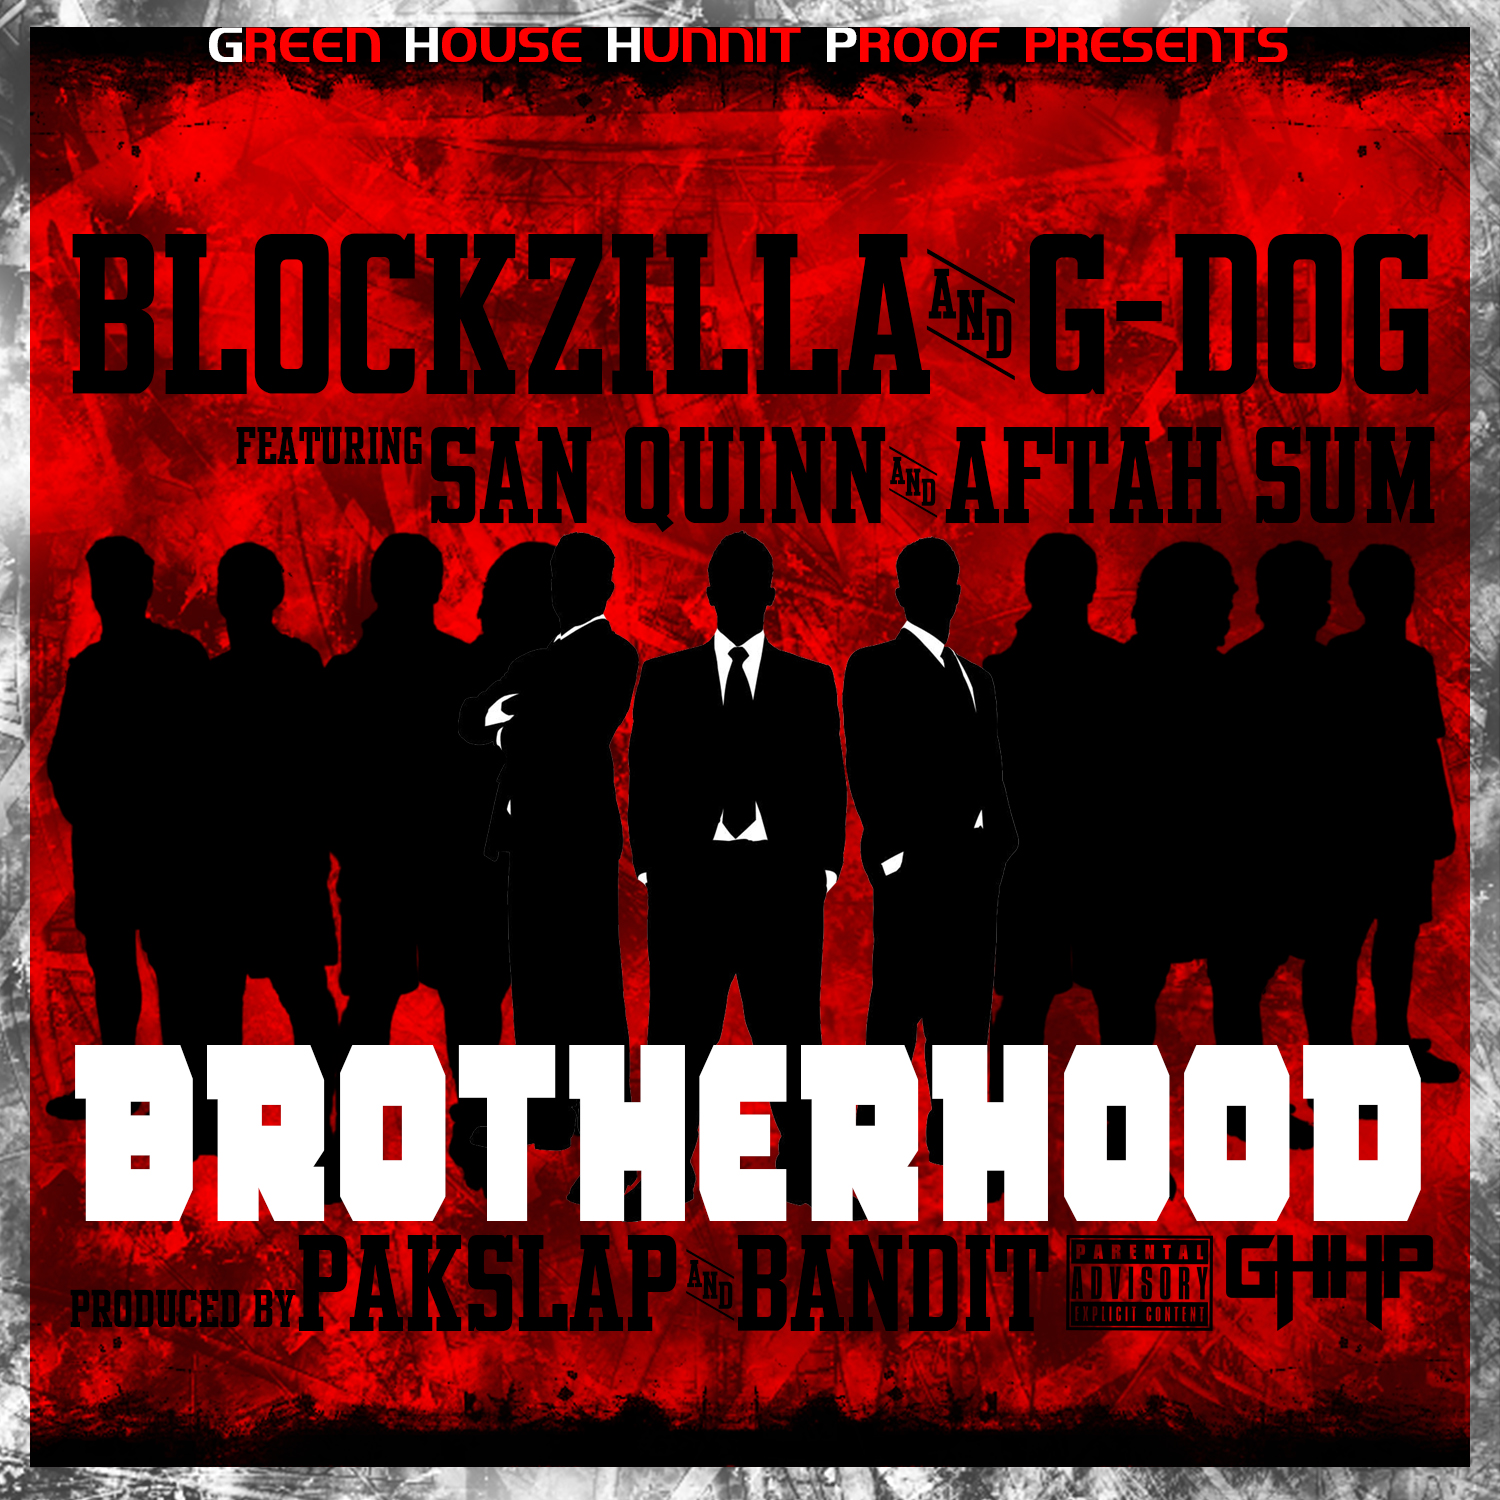 Blockzilla & G-Dog ft. San Quinn & Aftah Sum - Brotherhood (Produced by Pakslap & Bandit) [Thizzler.